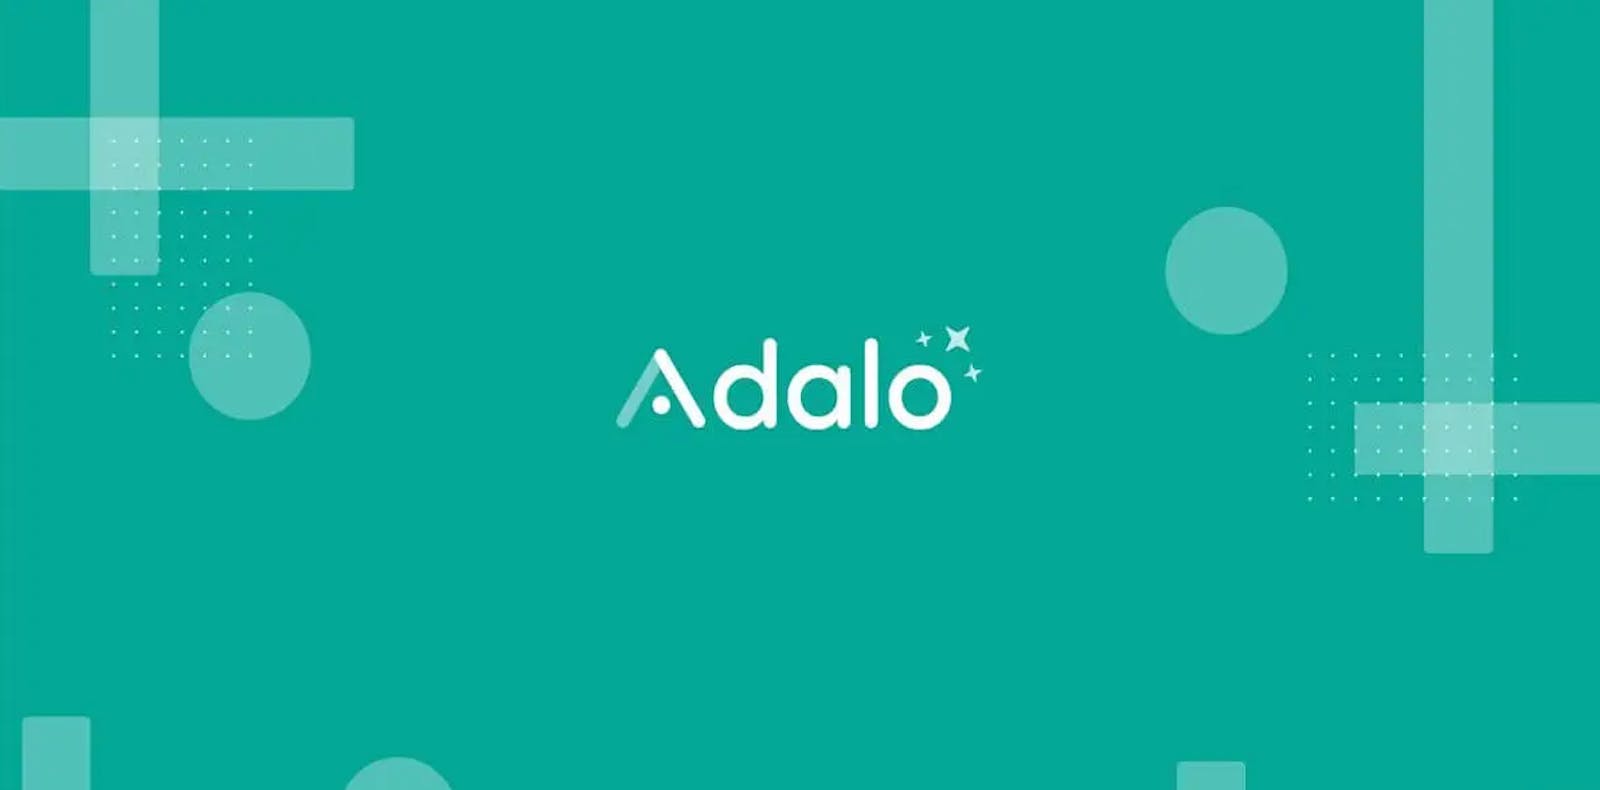 Adalo: The No-Code Platform for Mobile Developers